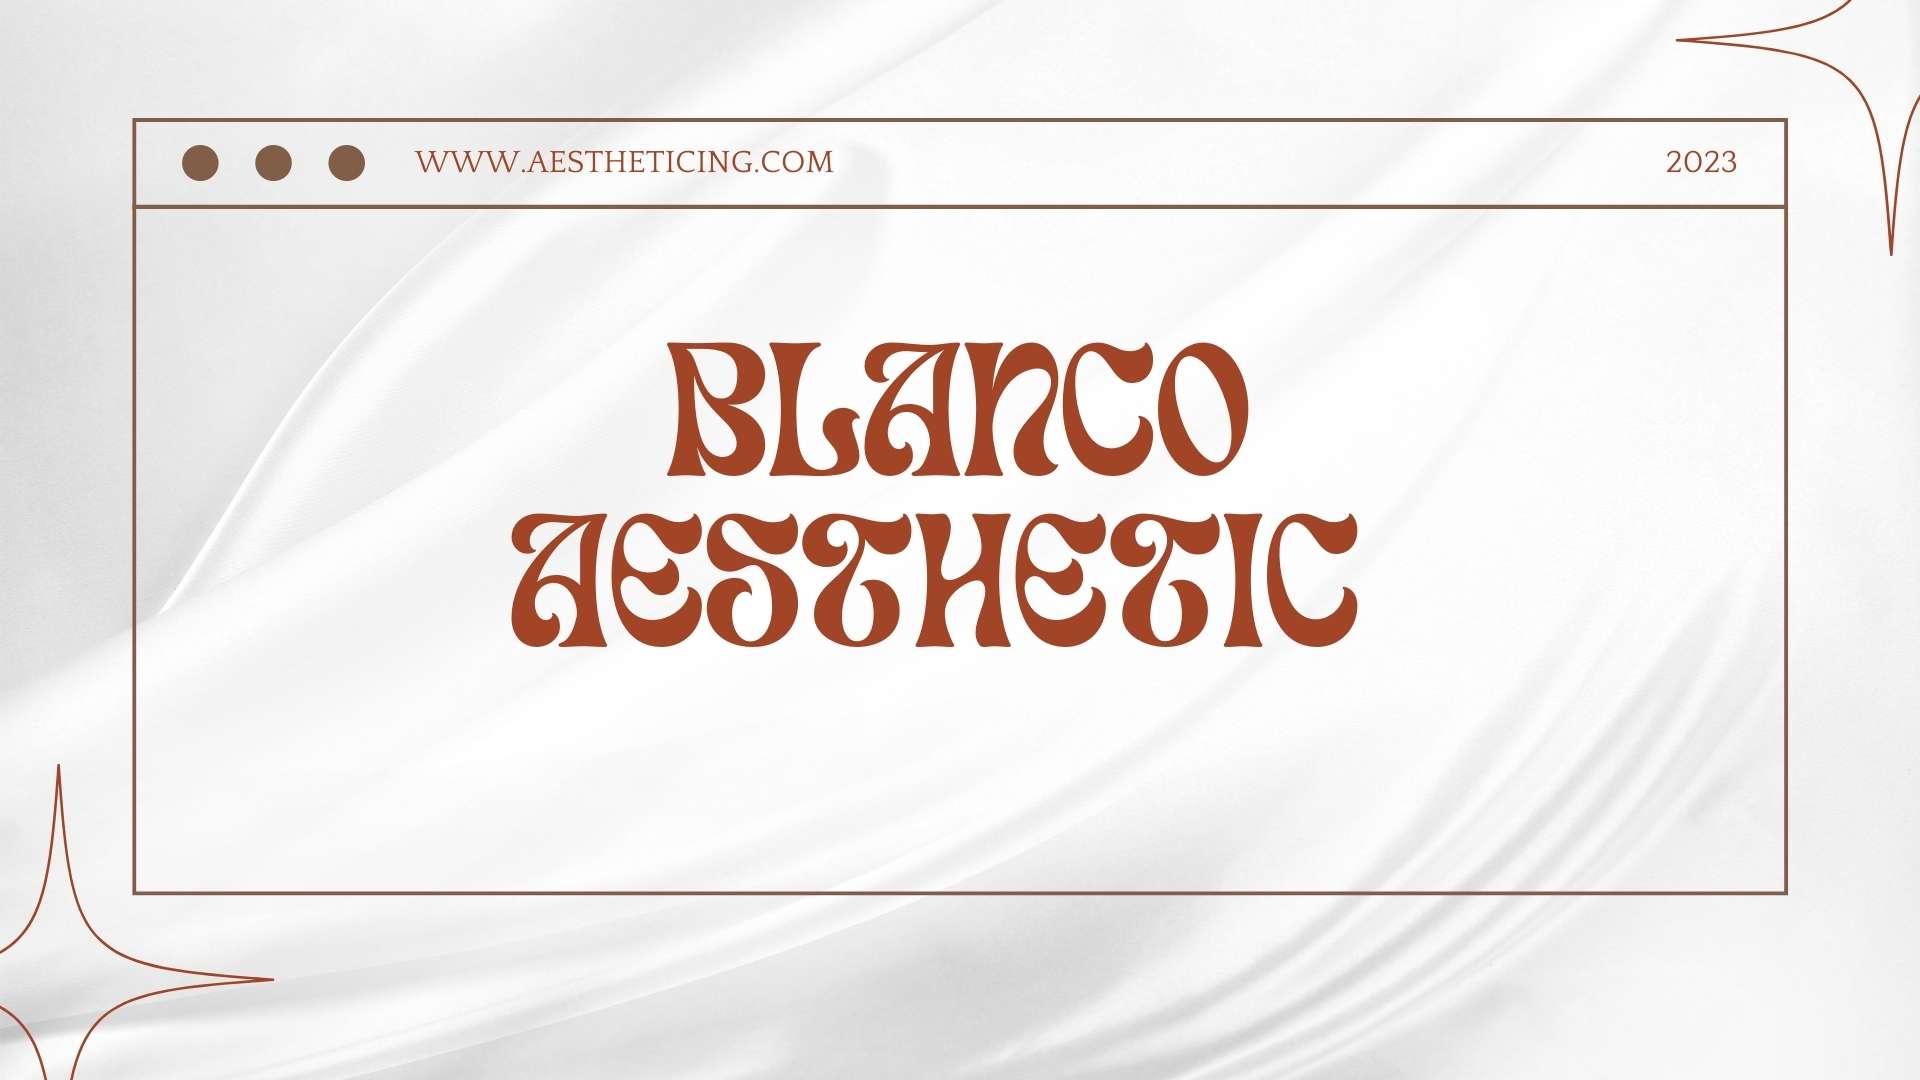 Blanco Aesthetic